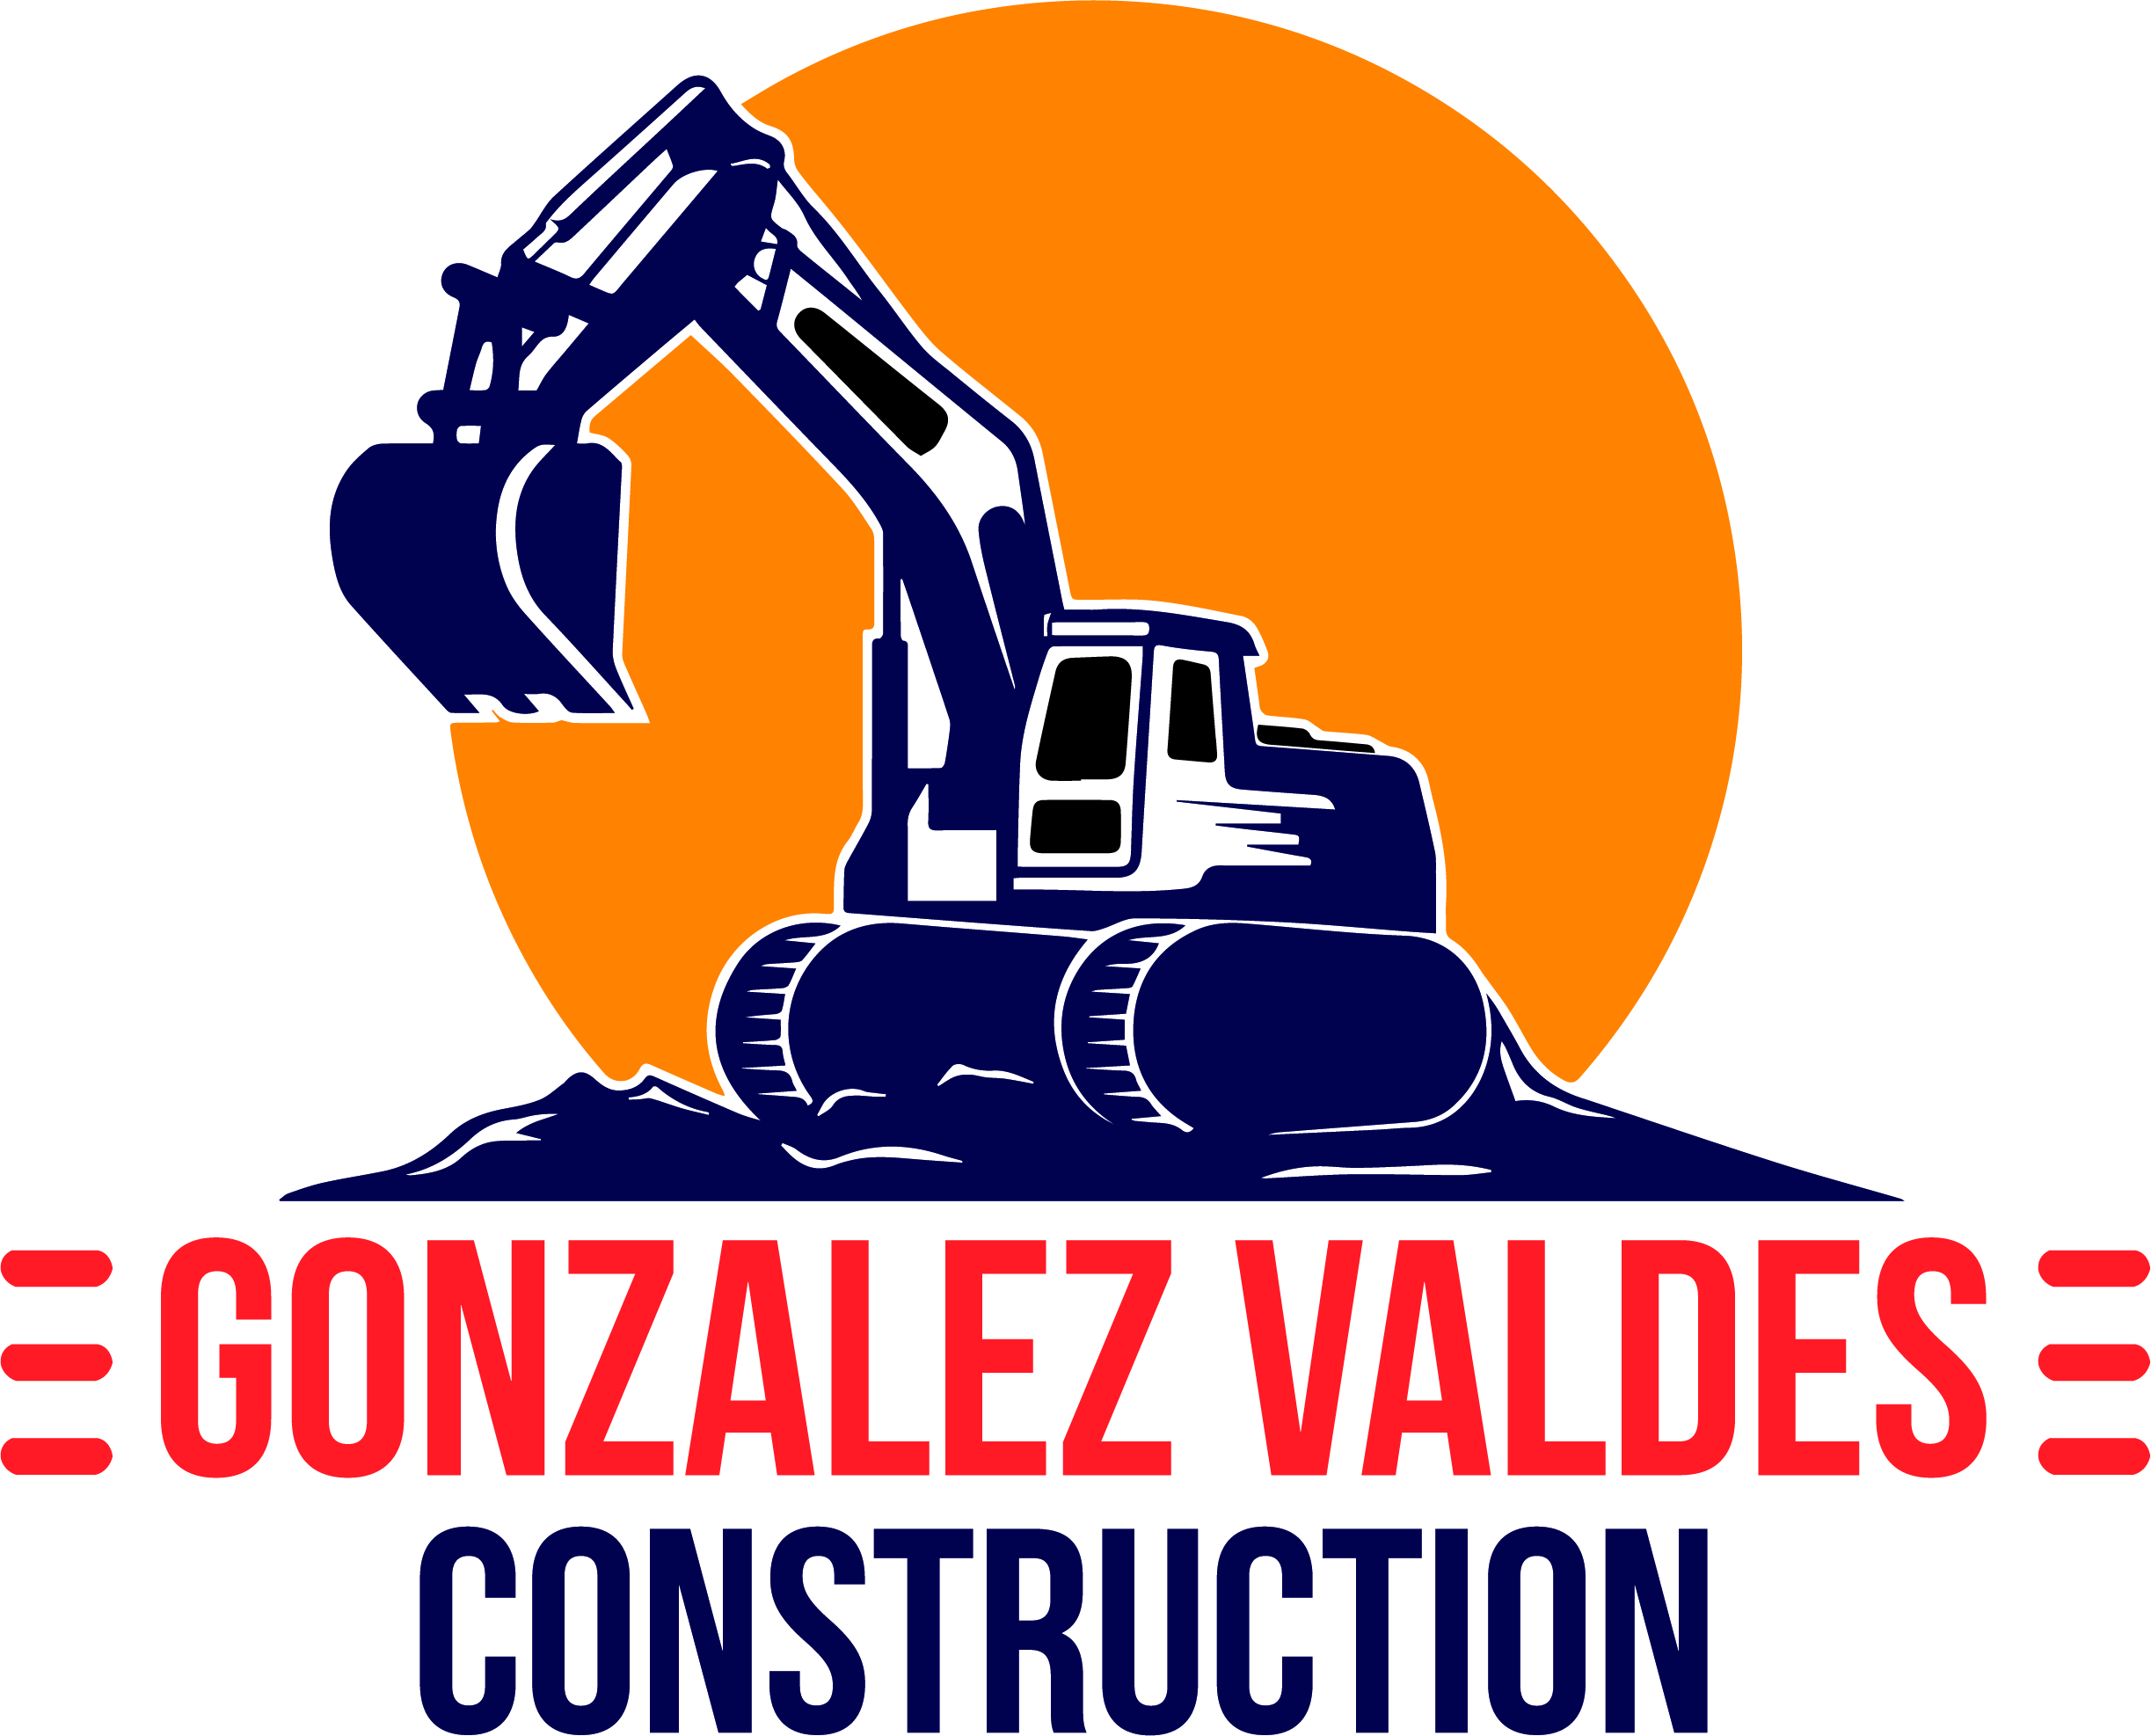 Gonzalez-valdes Construction Logo